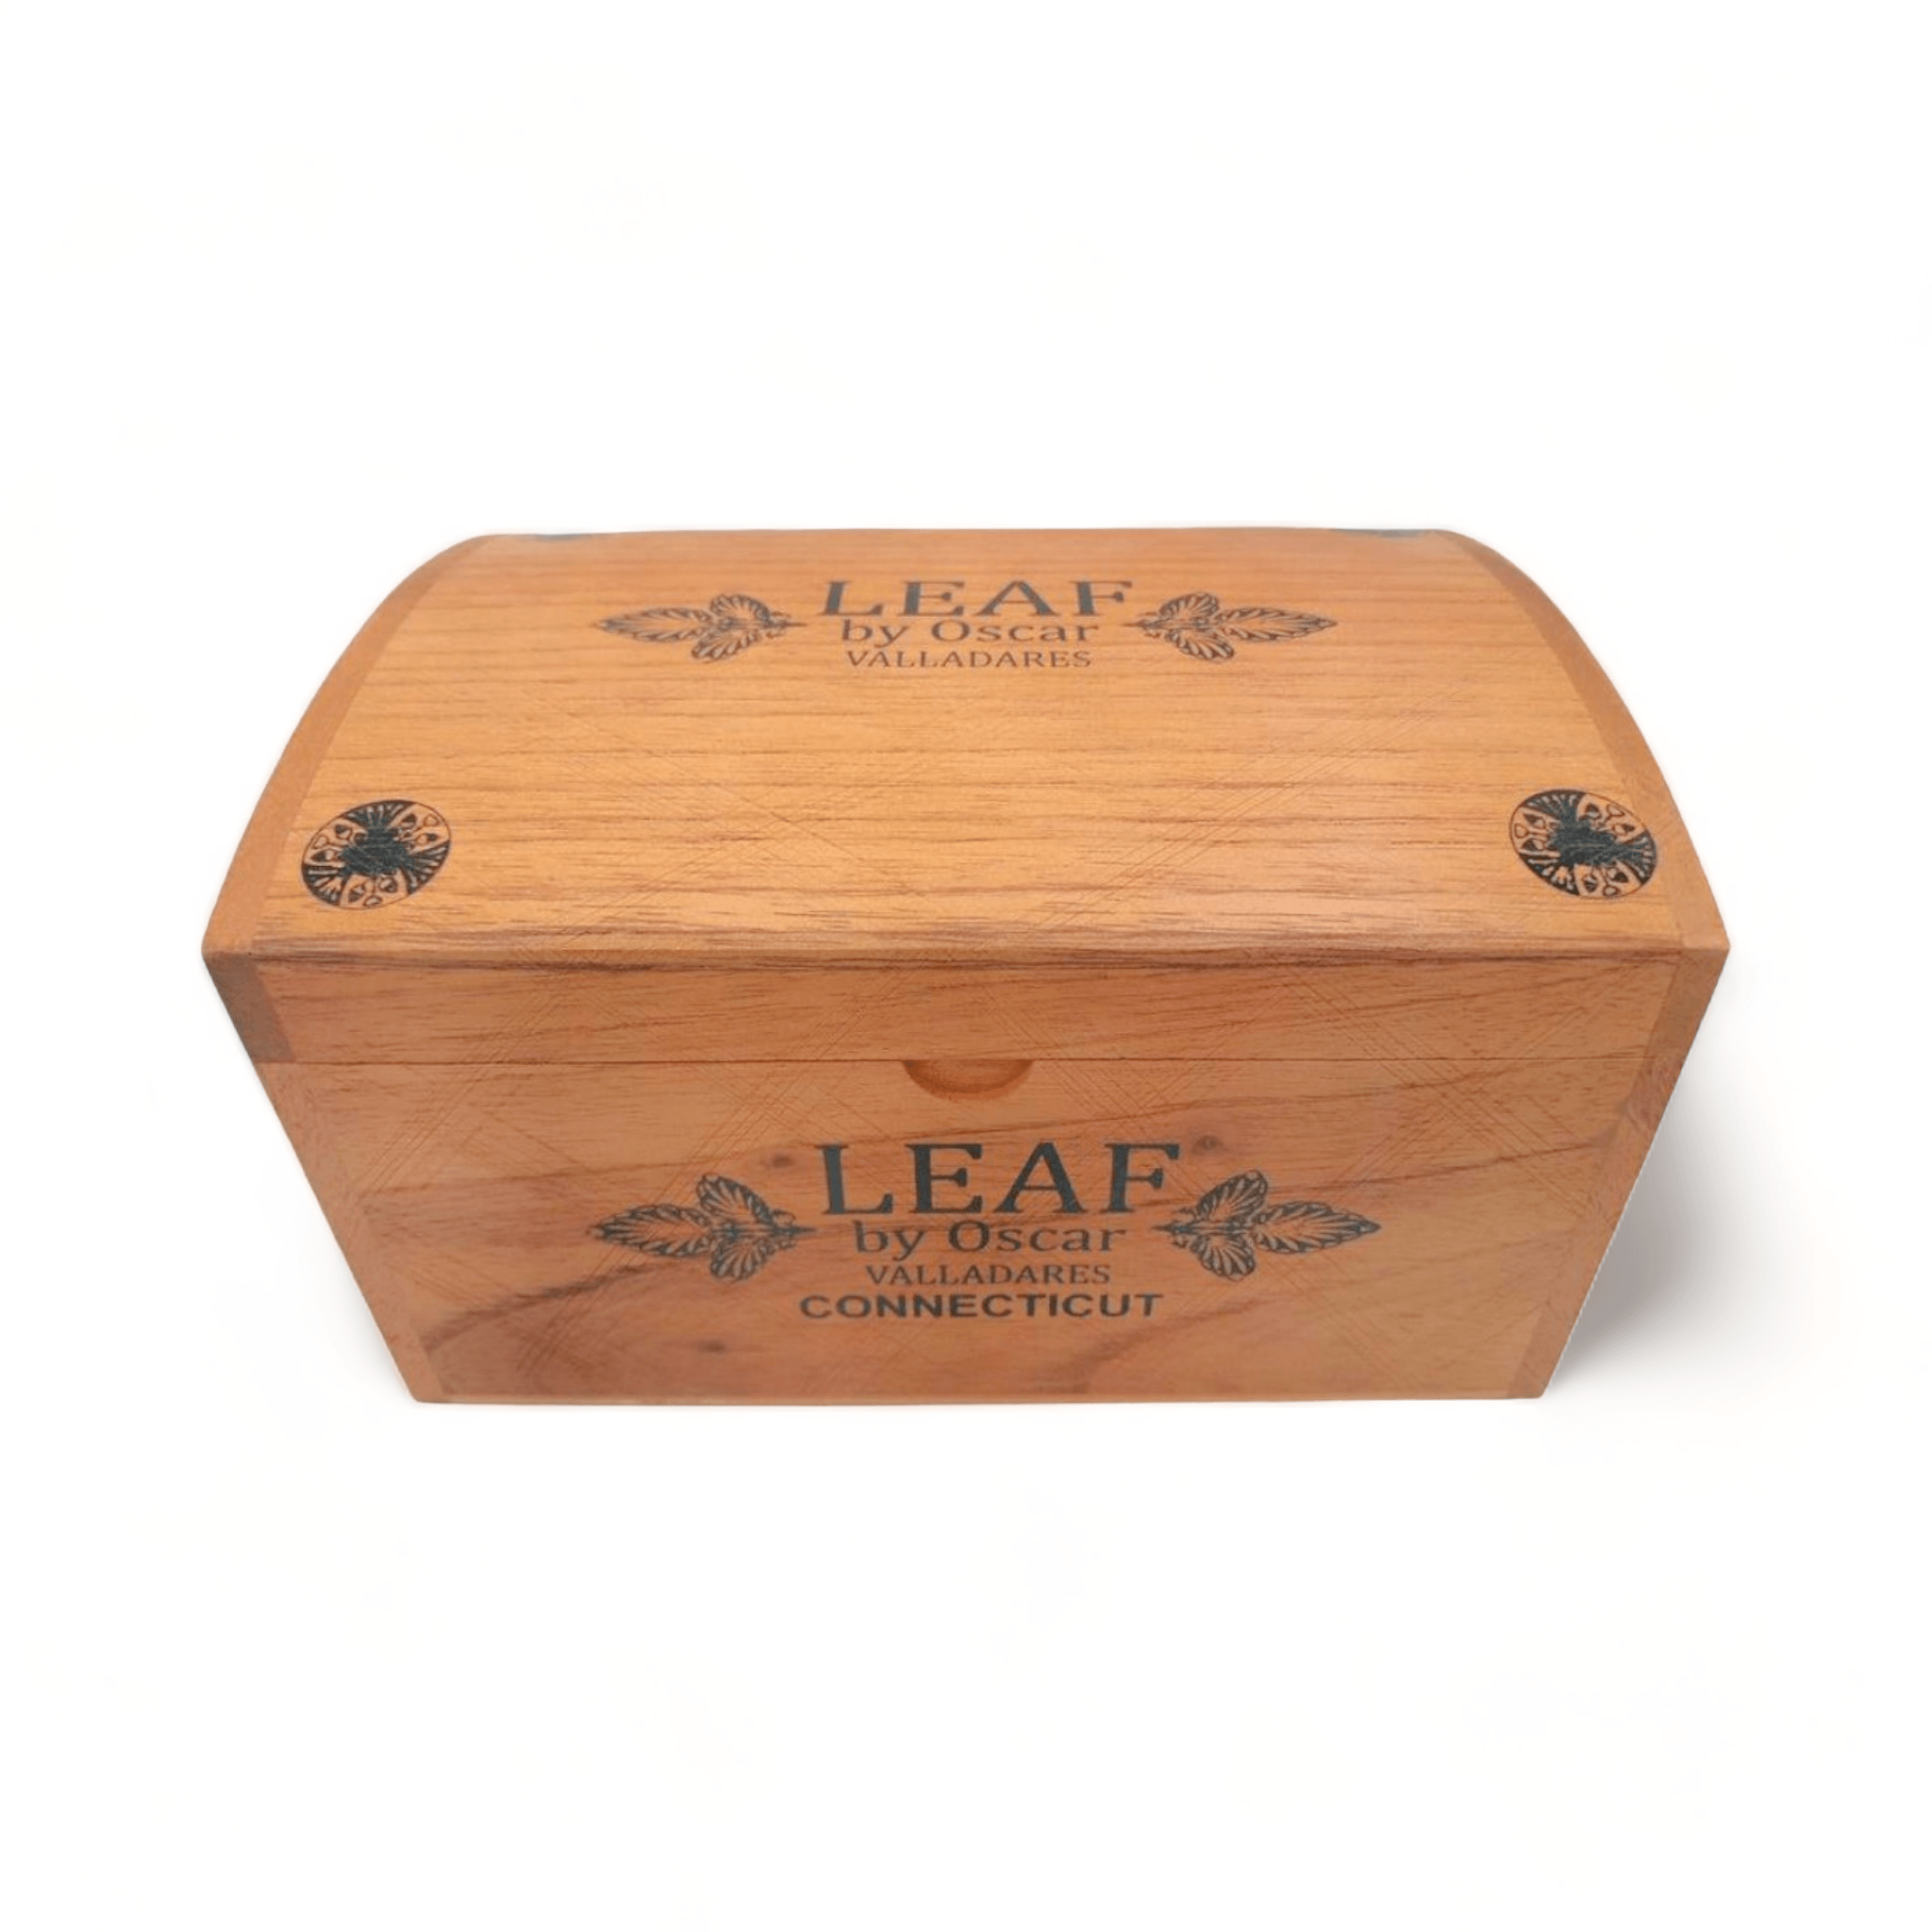 Oscar Valladares Cigars | Leaf Connecticut Toro | Box of 20 - hk.cohcigars